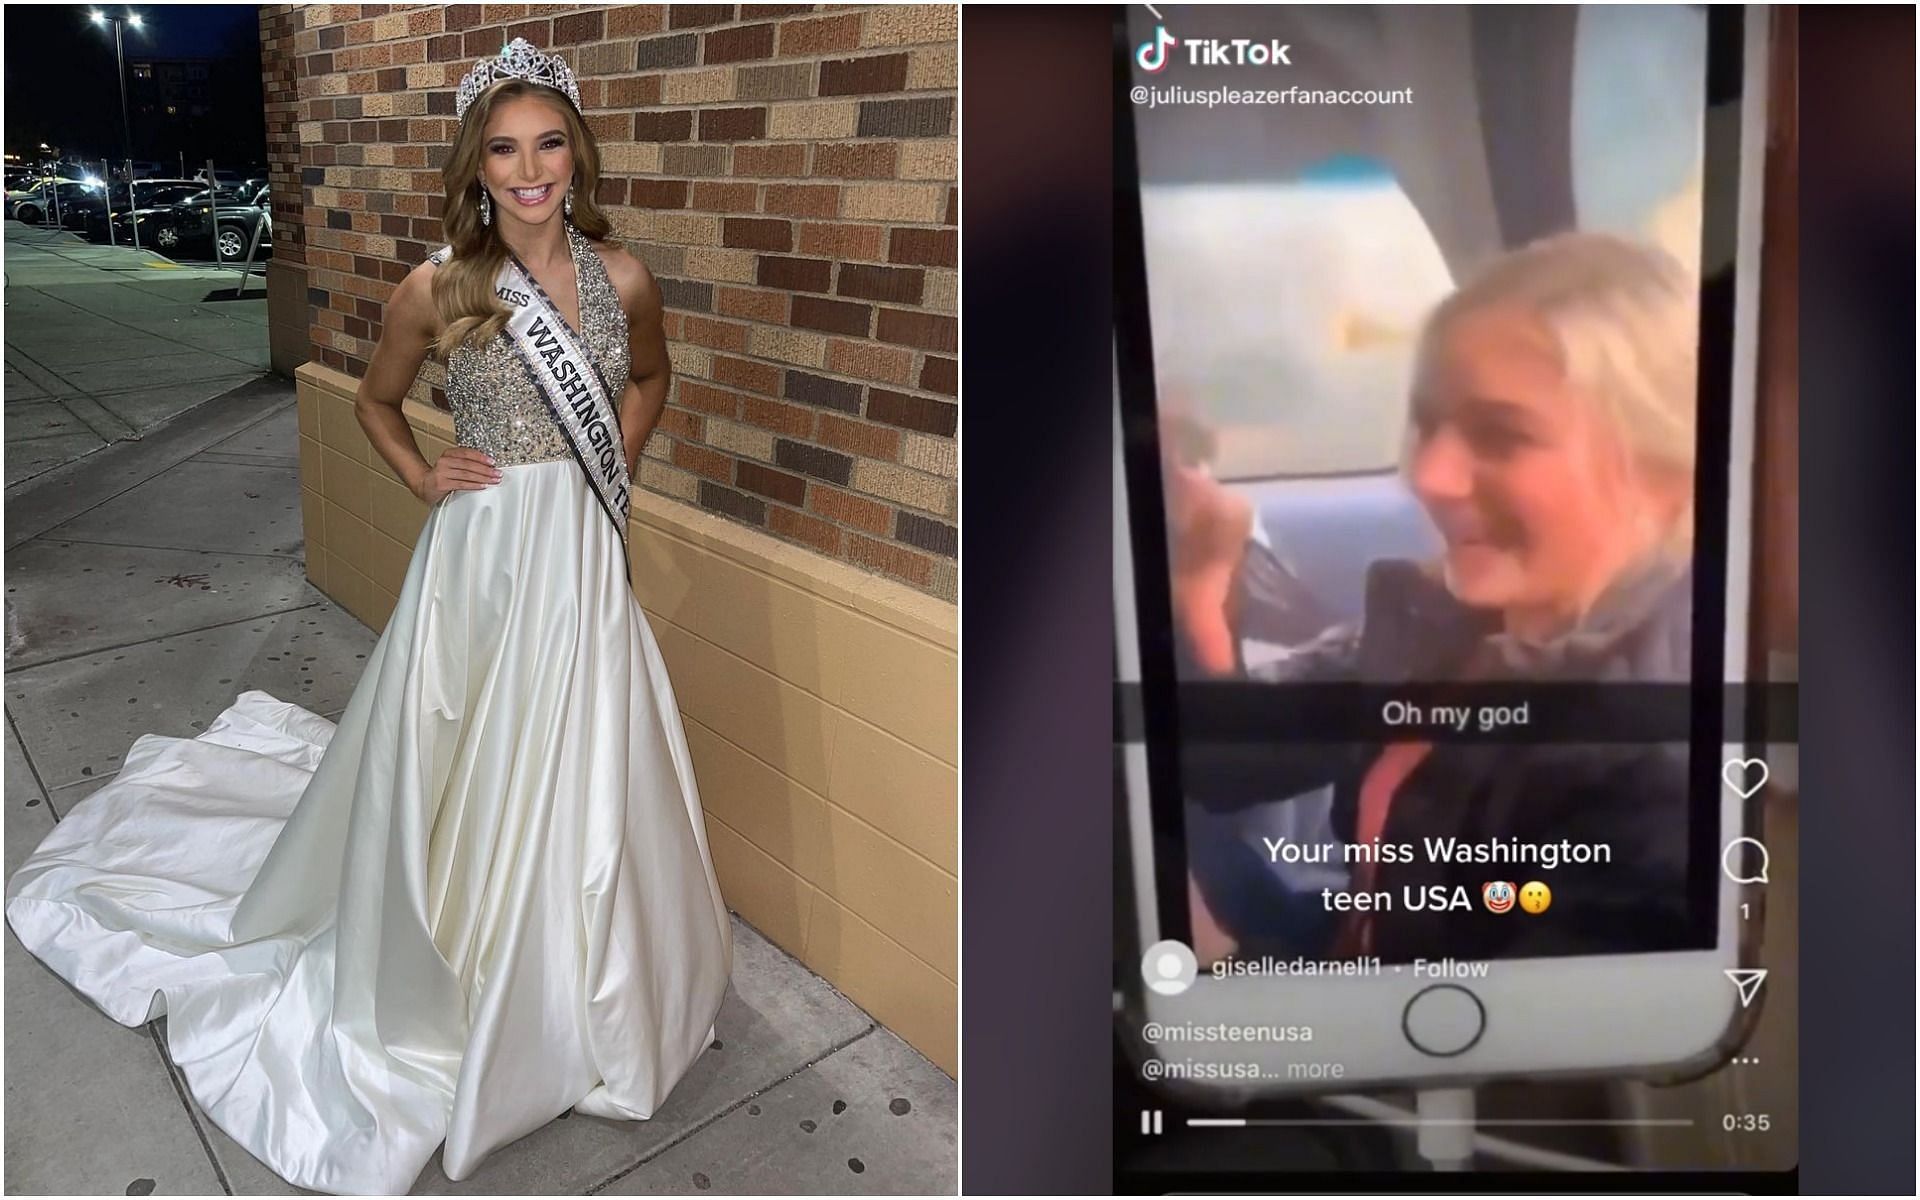 Miss Teen Washington USA, Kate Dixon under fire for mouthing racial slur (Image via @misswateenusa/Instagram and @@juliuspleazerfanaccount/TikTok)